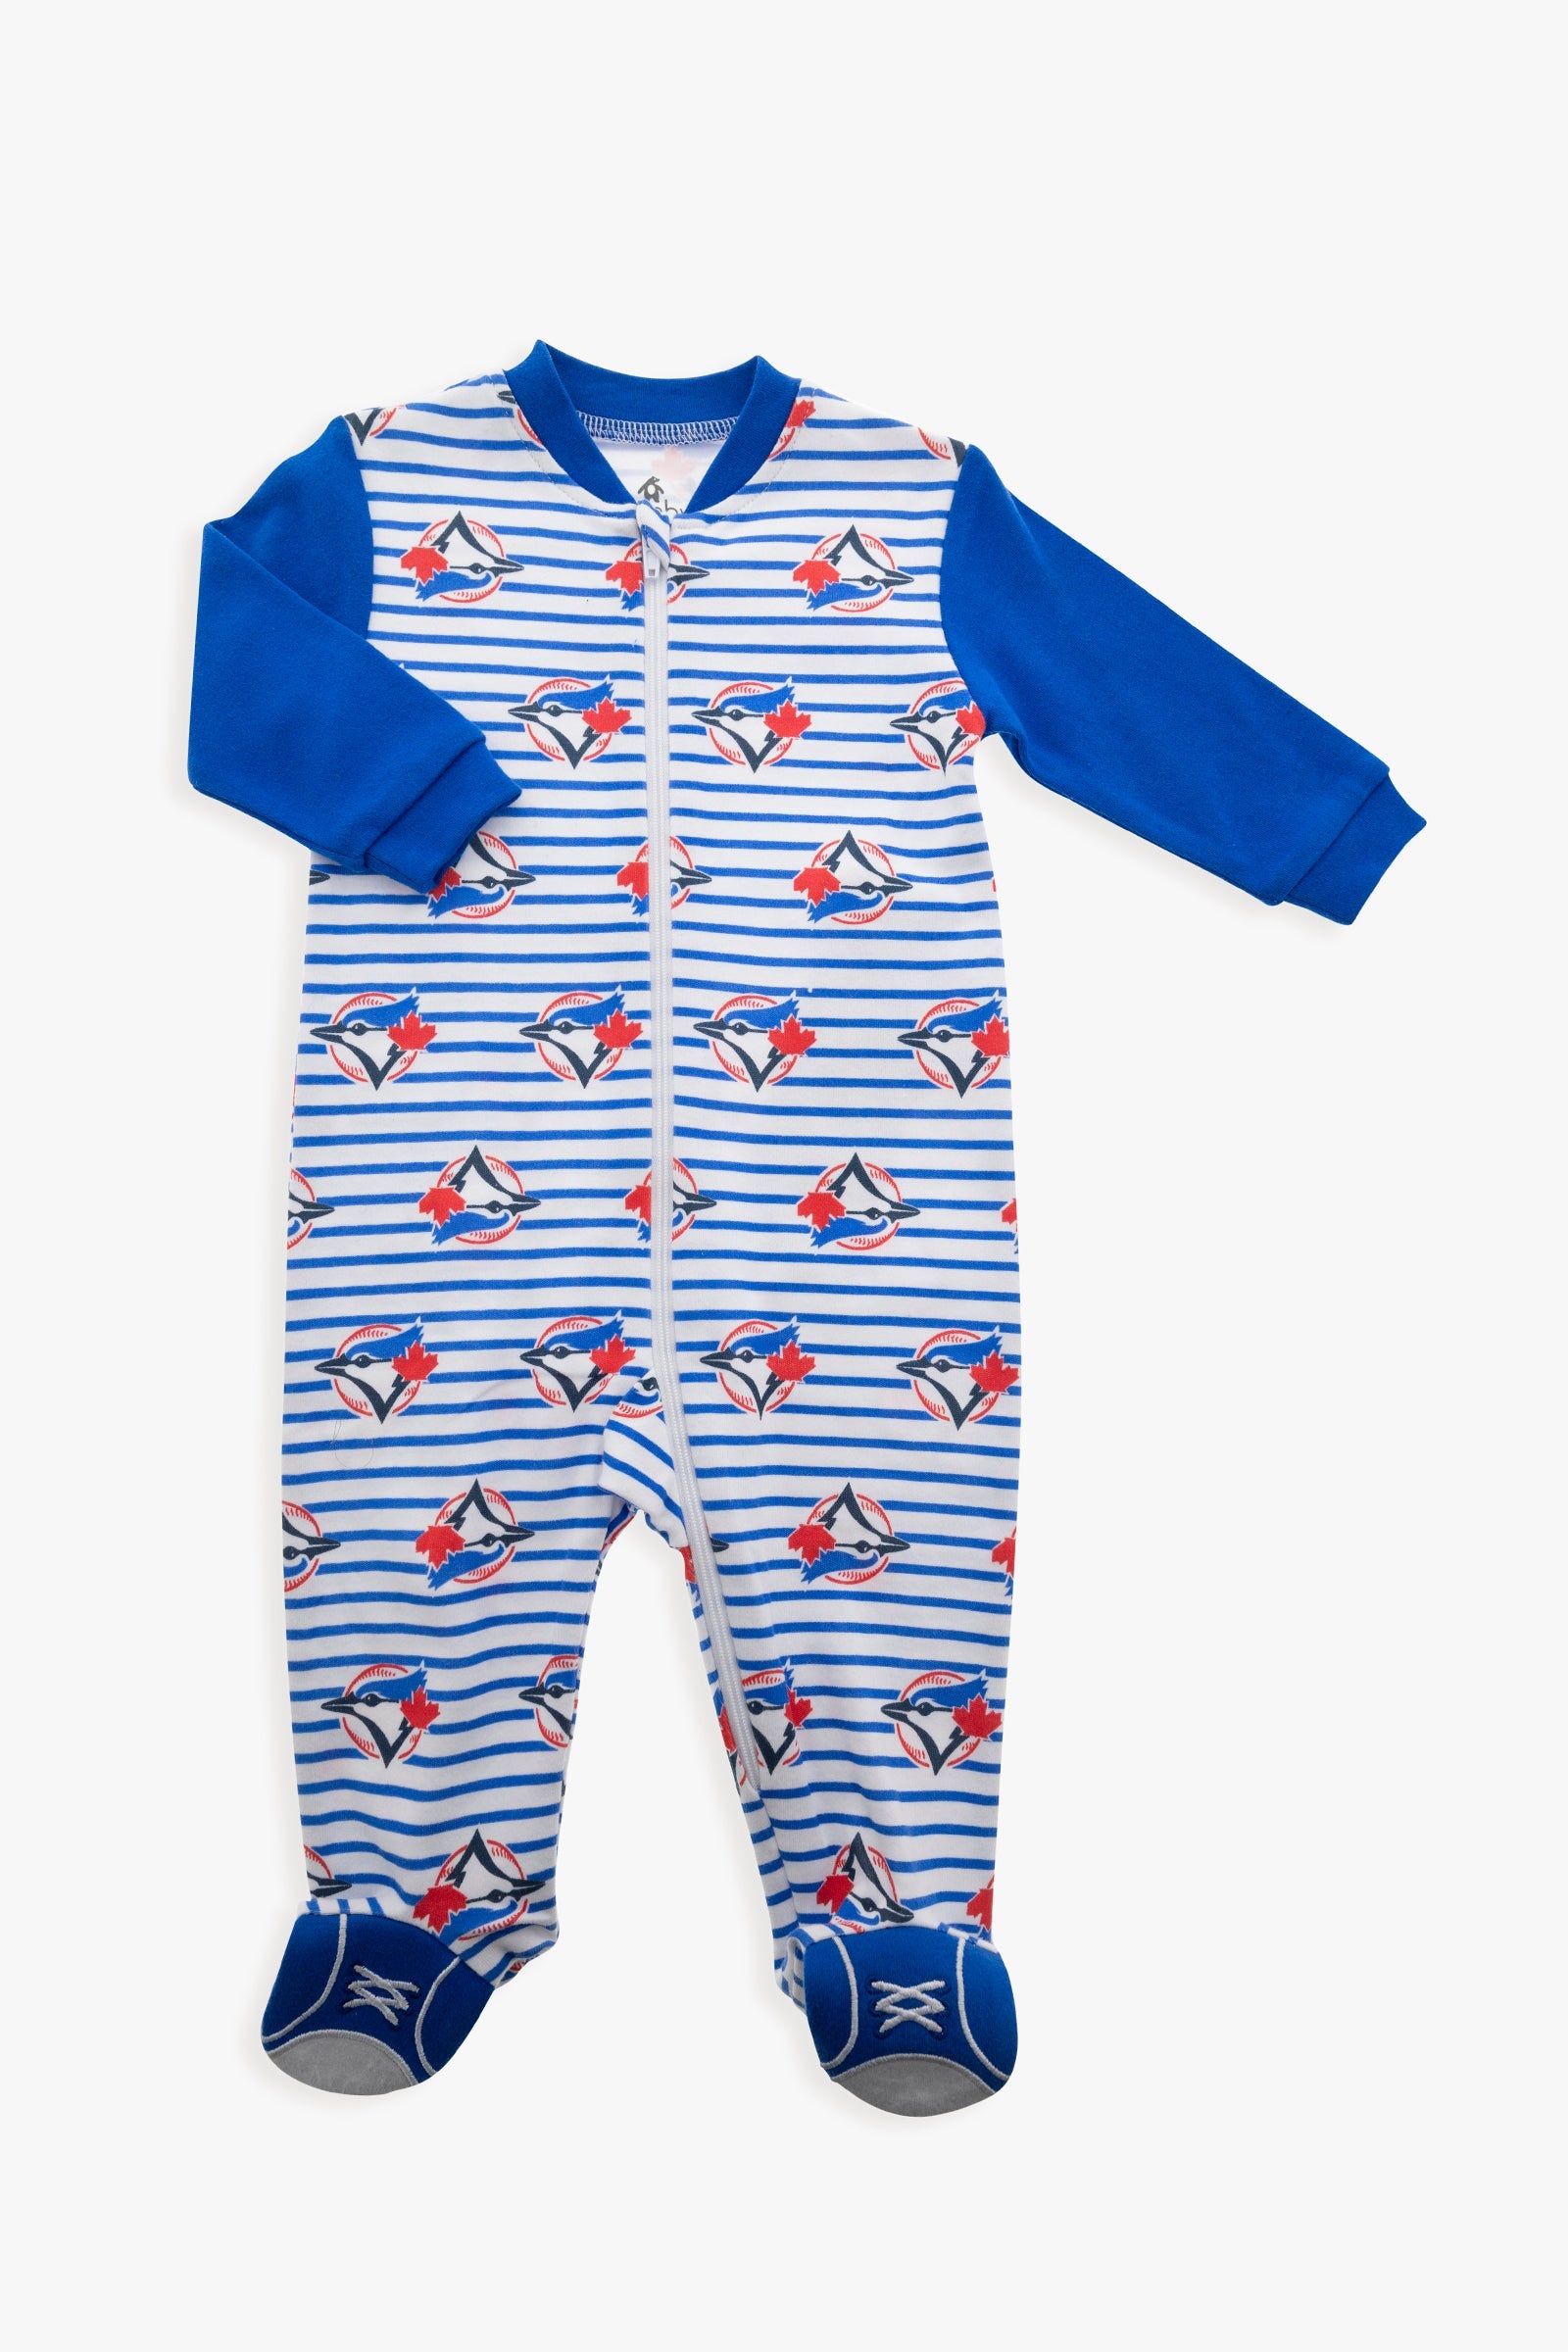 Gertex MLB Toronto Blue Jays Pattern ToddlerSleeper with Zipper 